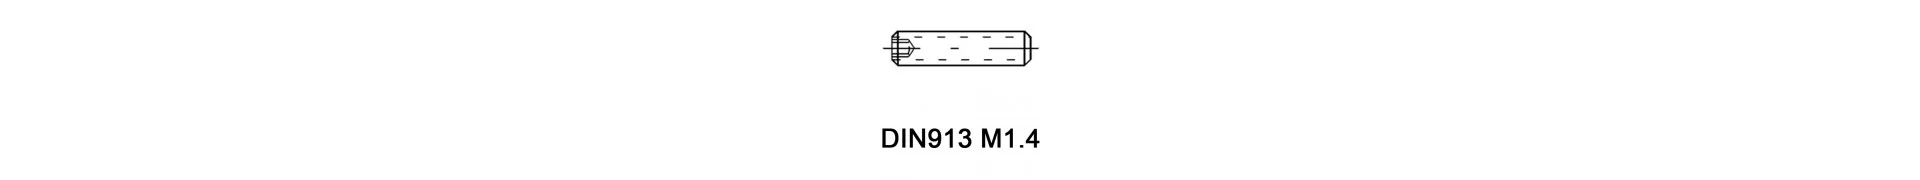 DIN913 M1.4